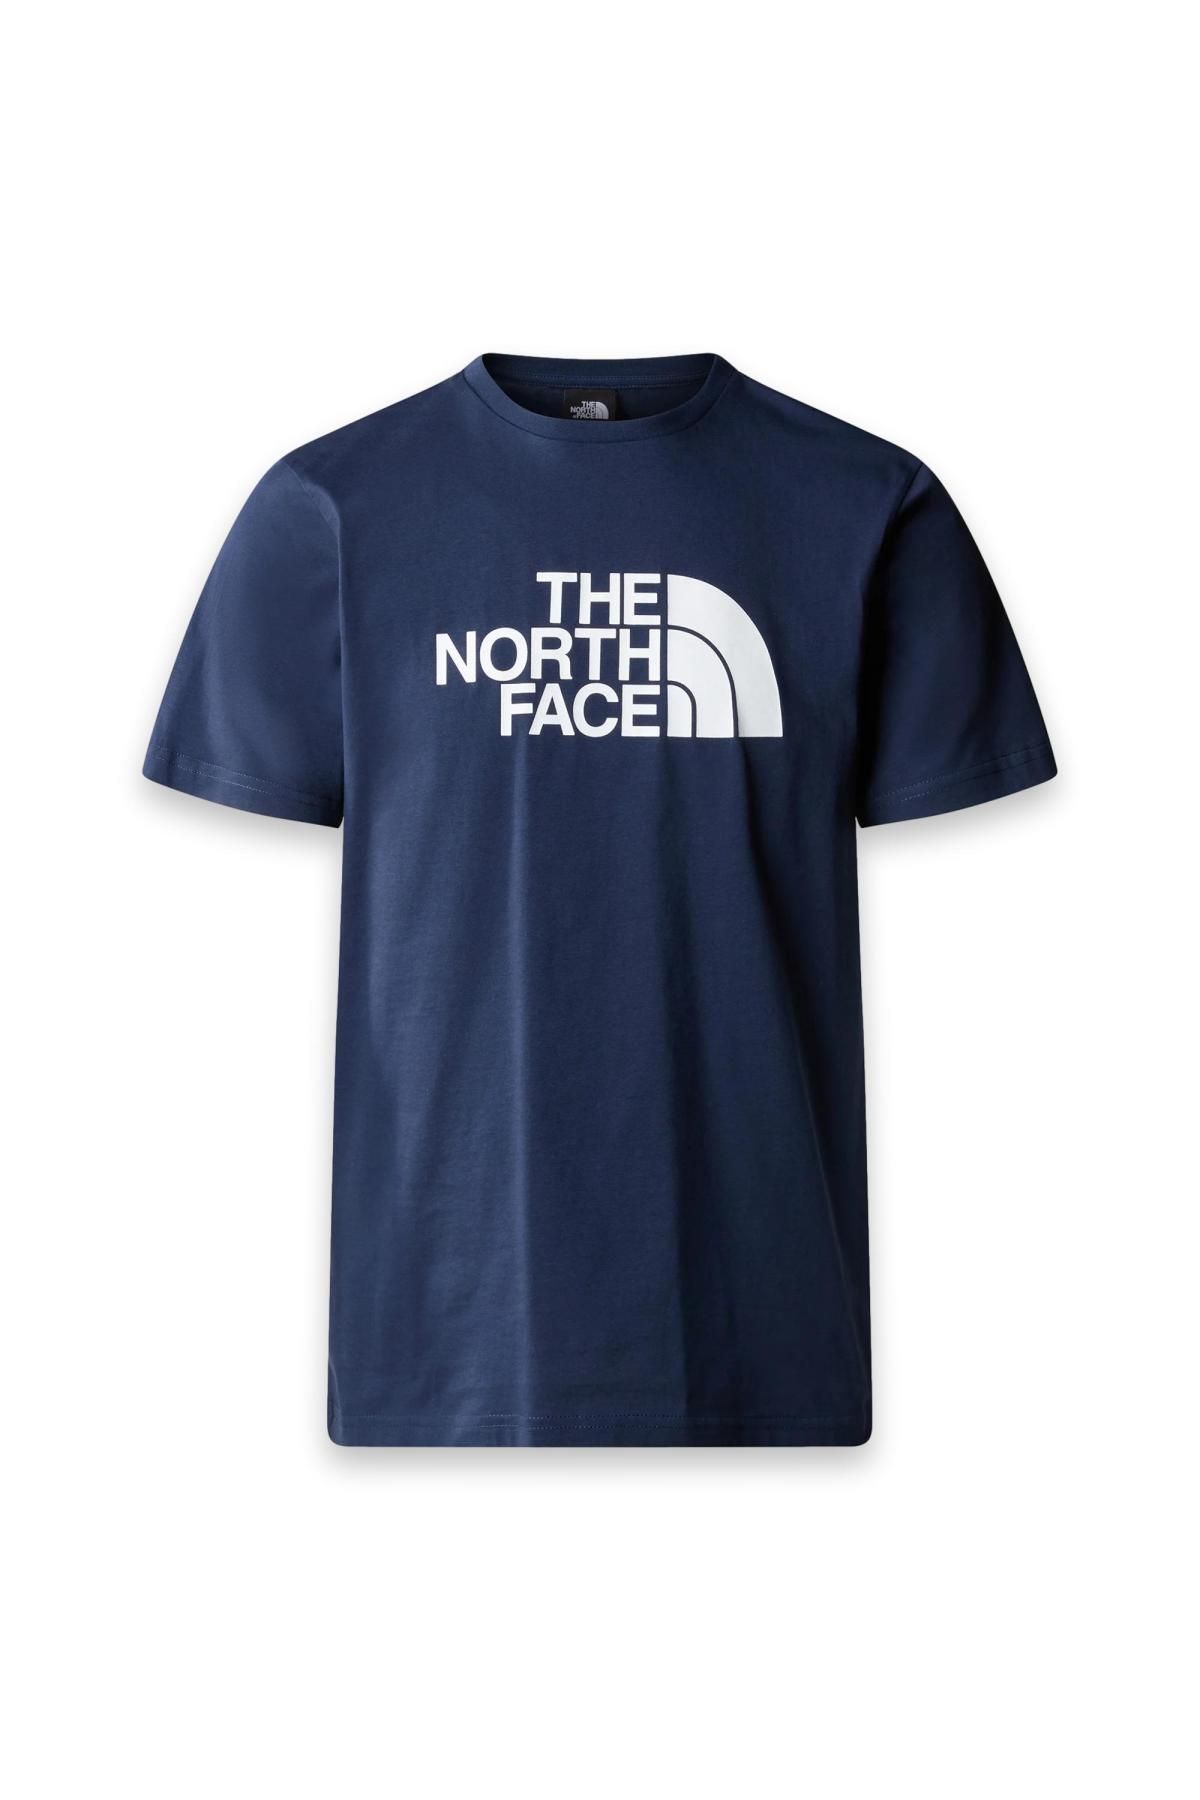 The North Face Nf0A87N5 M S/S Easy Tee Lacivert Erkek T-Shirt